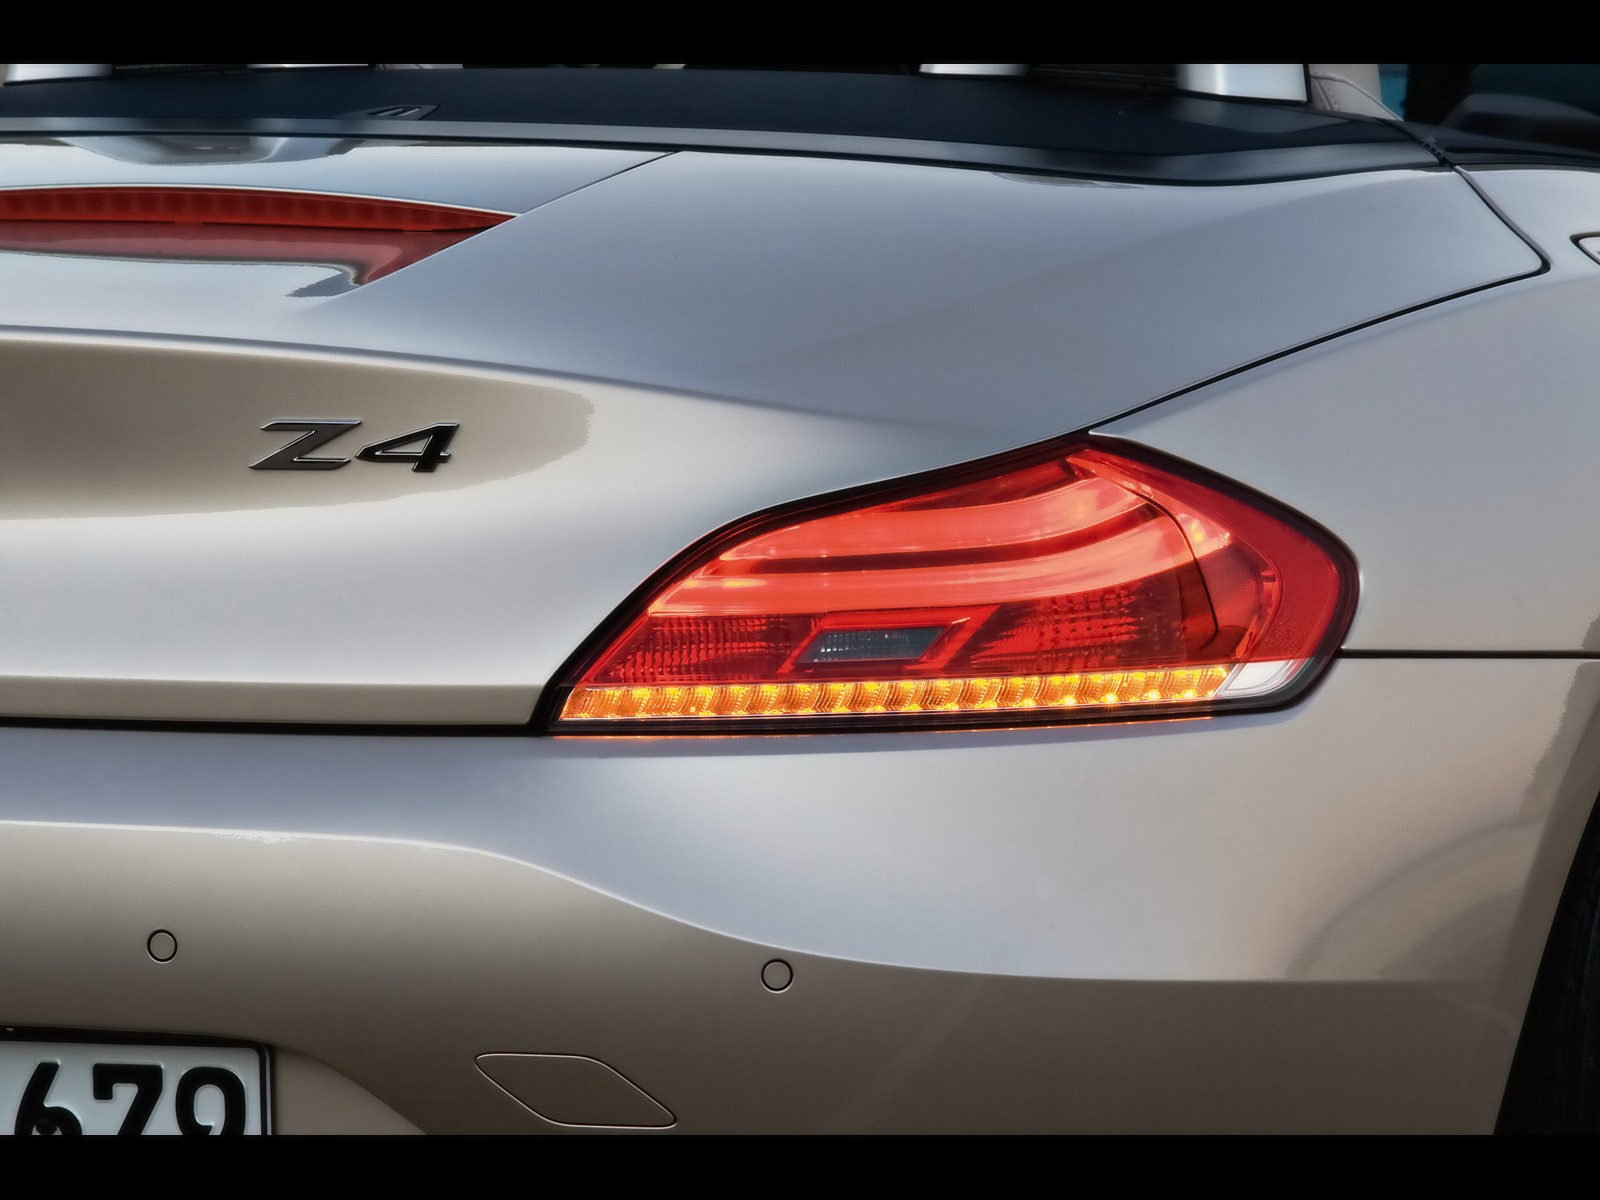 2009 BMW Z4 Roadster Rear Light after